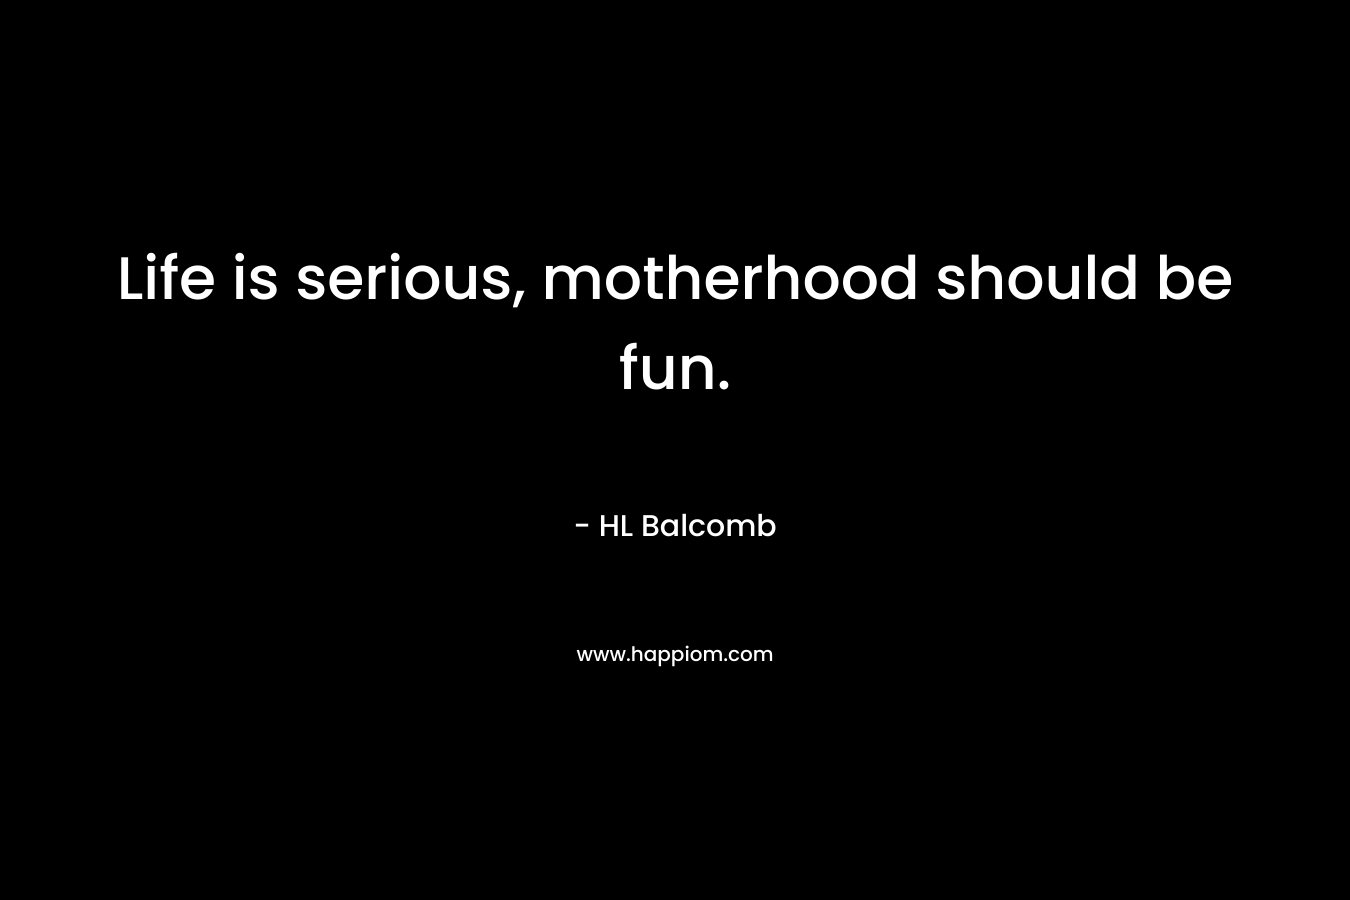 Life is serious, motherhood should be fun.